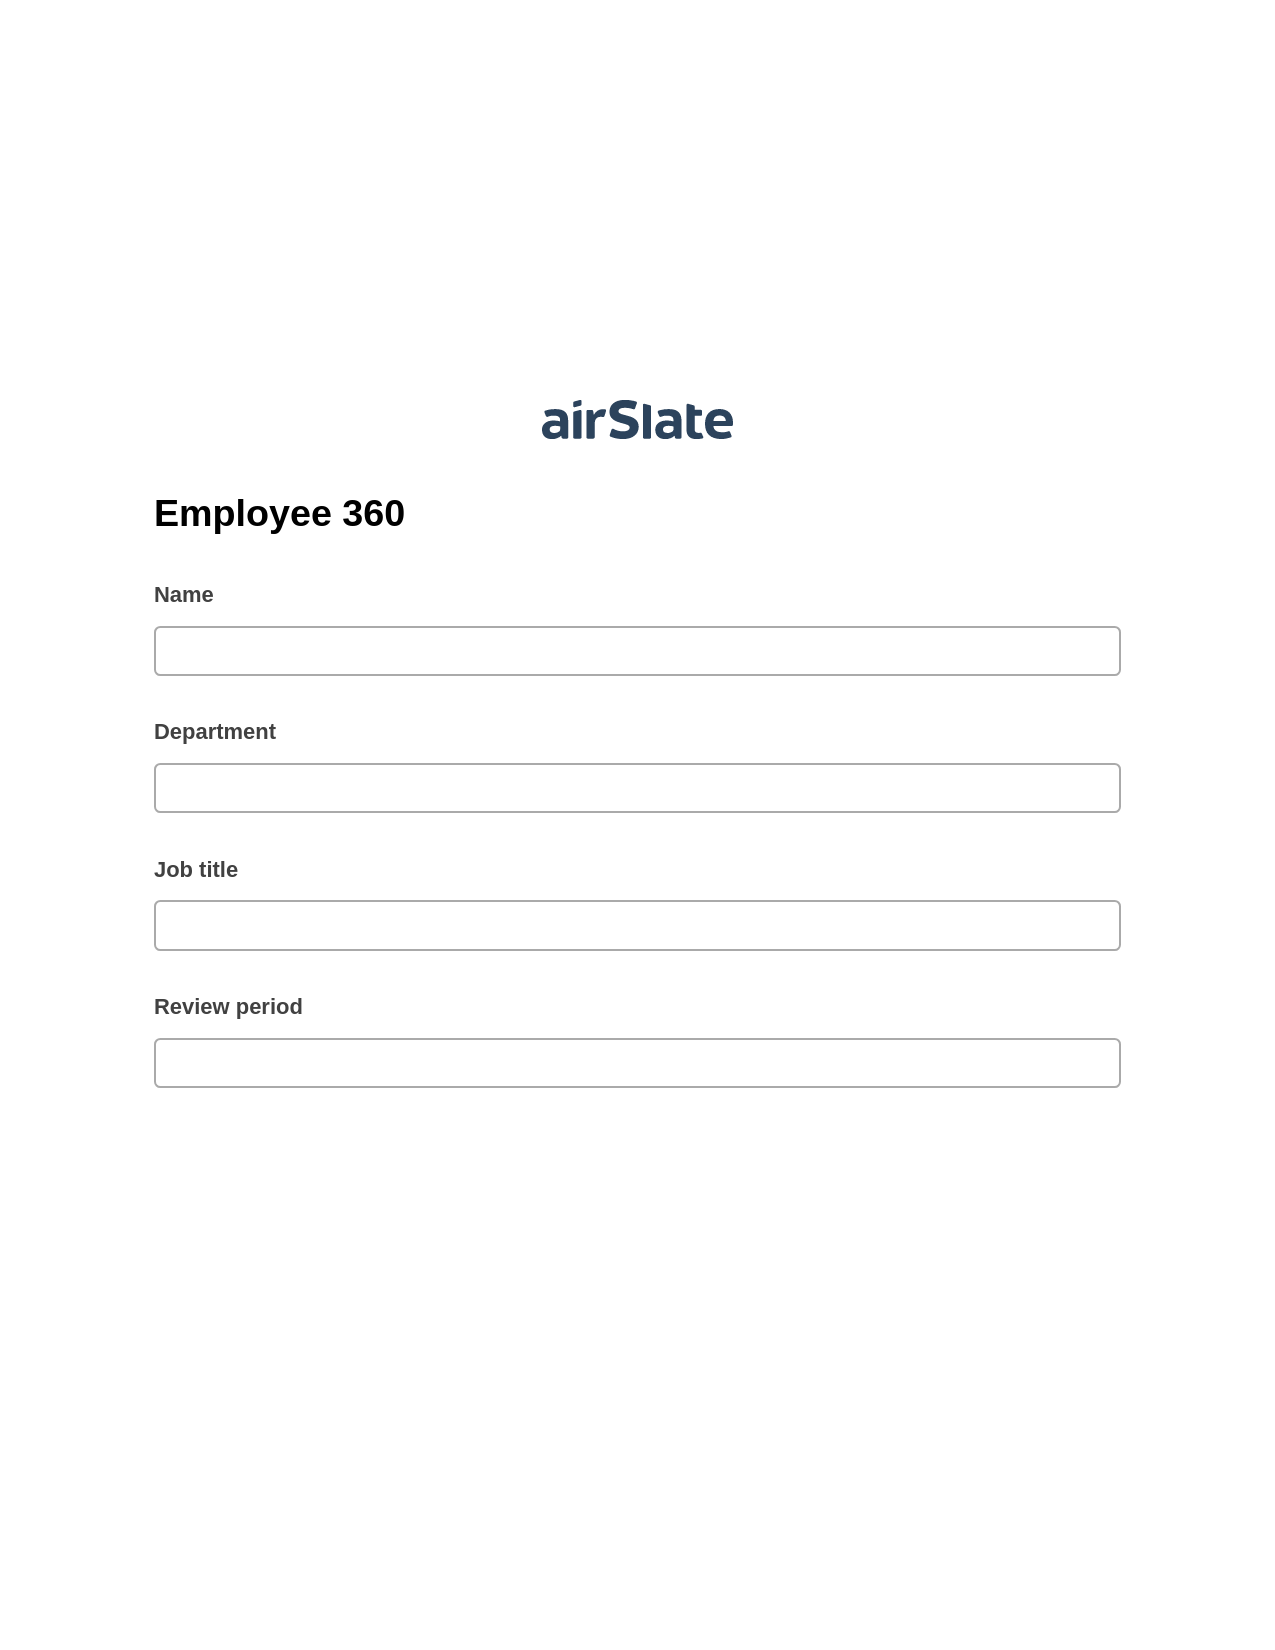 Employee 360 Pre-fill from Excel Spreadsheet Bot, Remove Slate Bot, Post-finish Document Bot